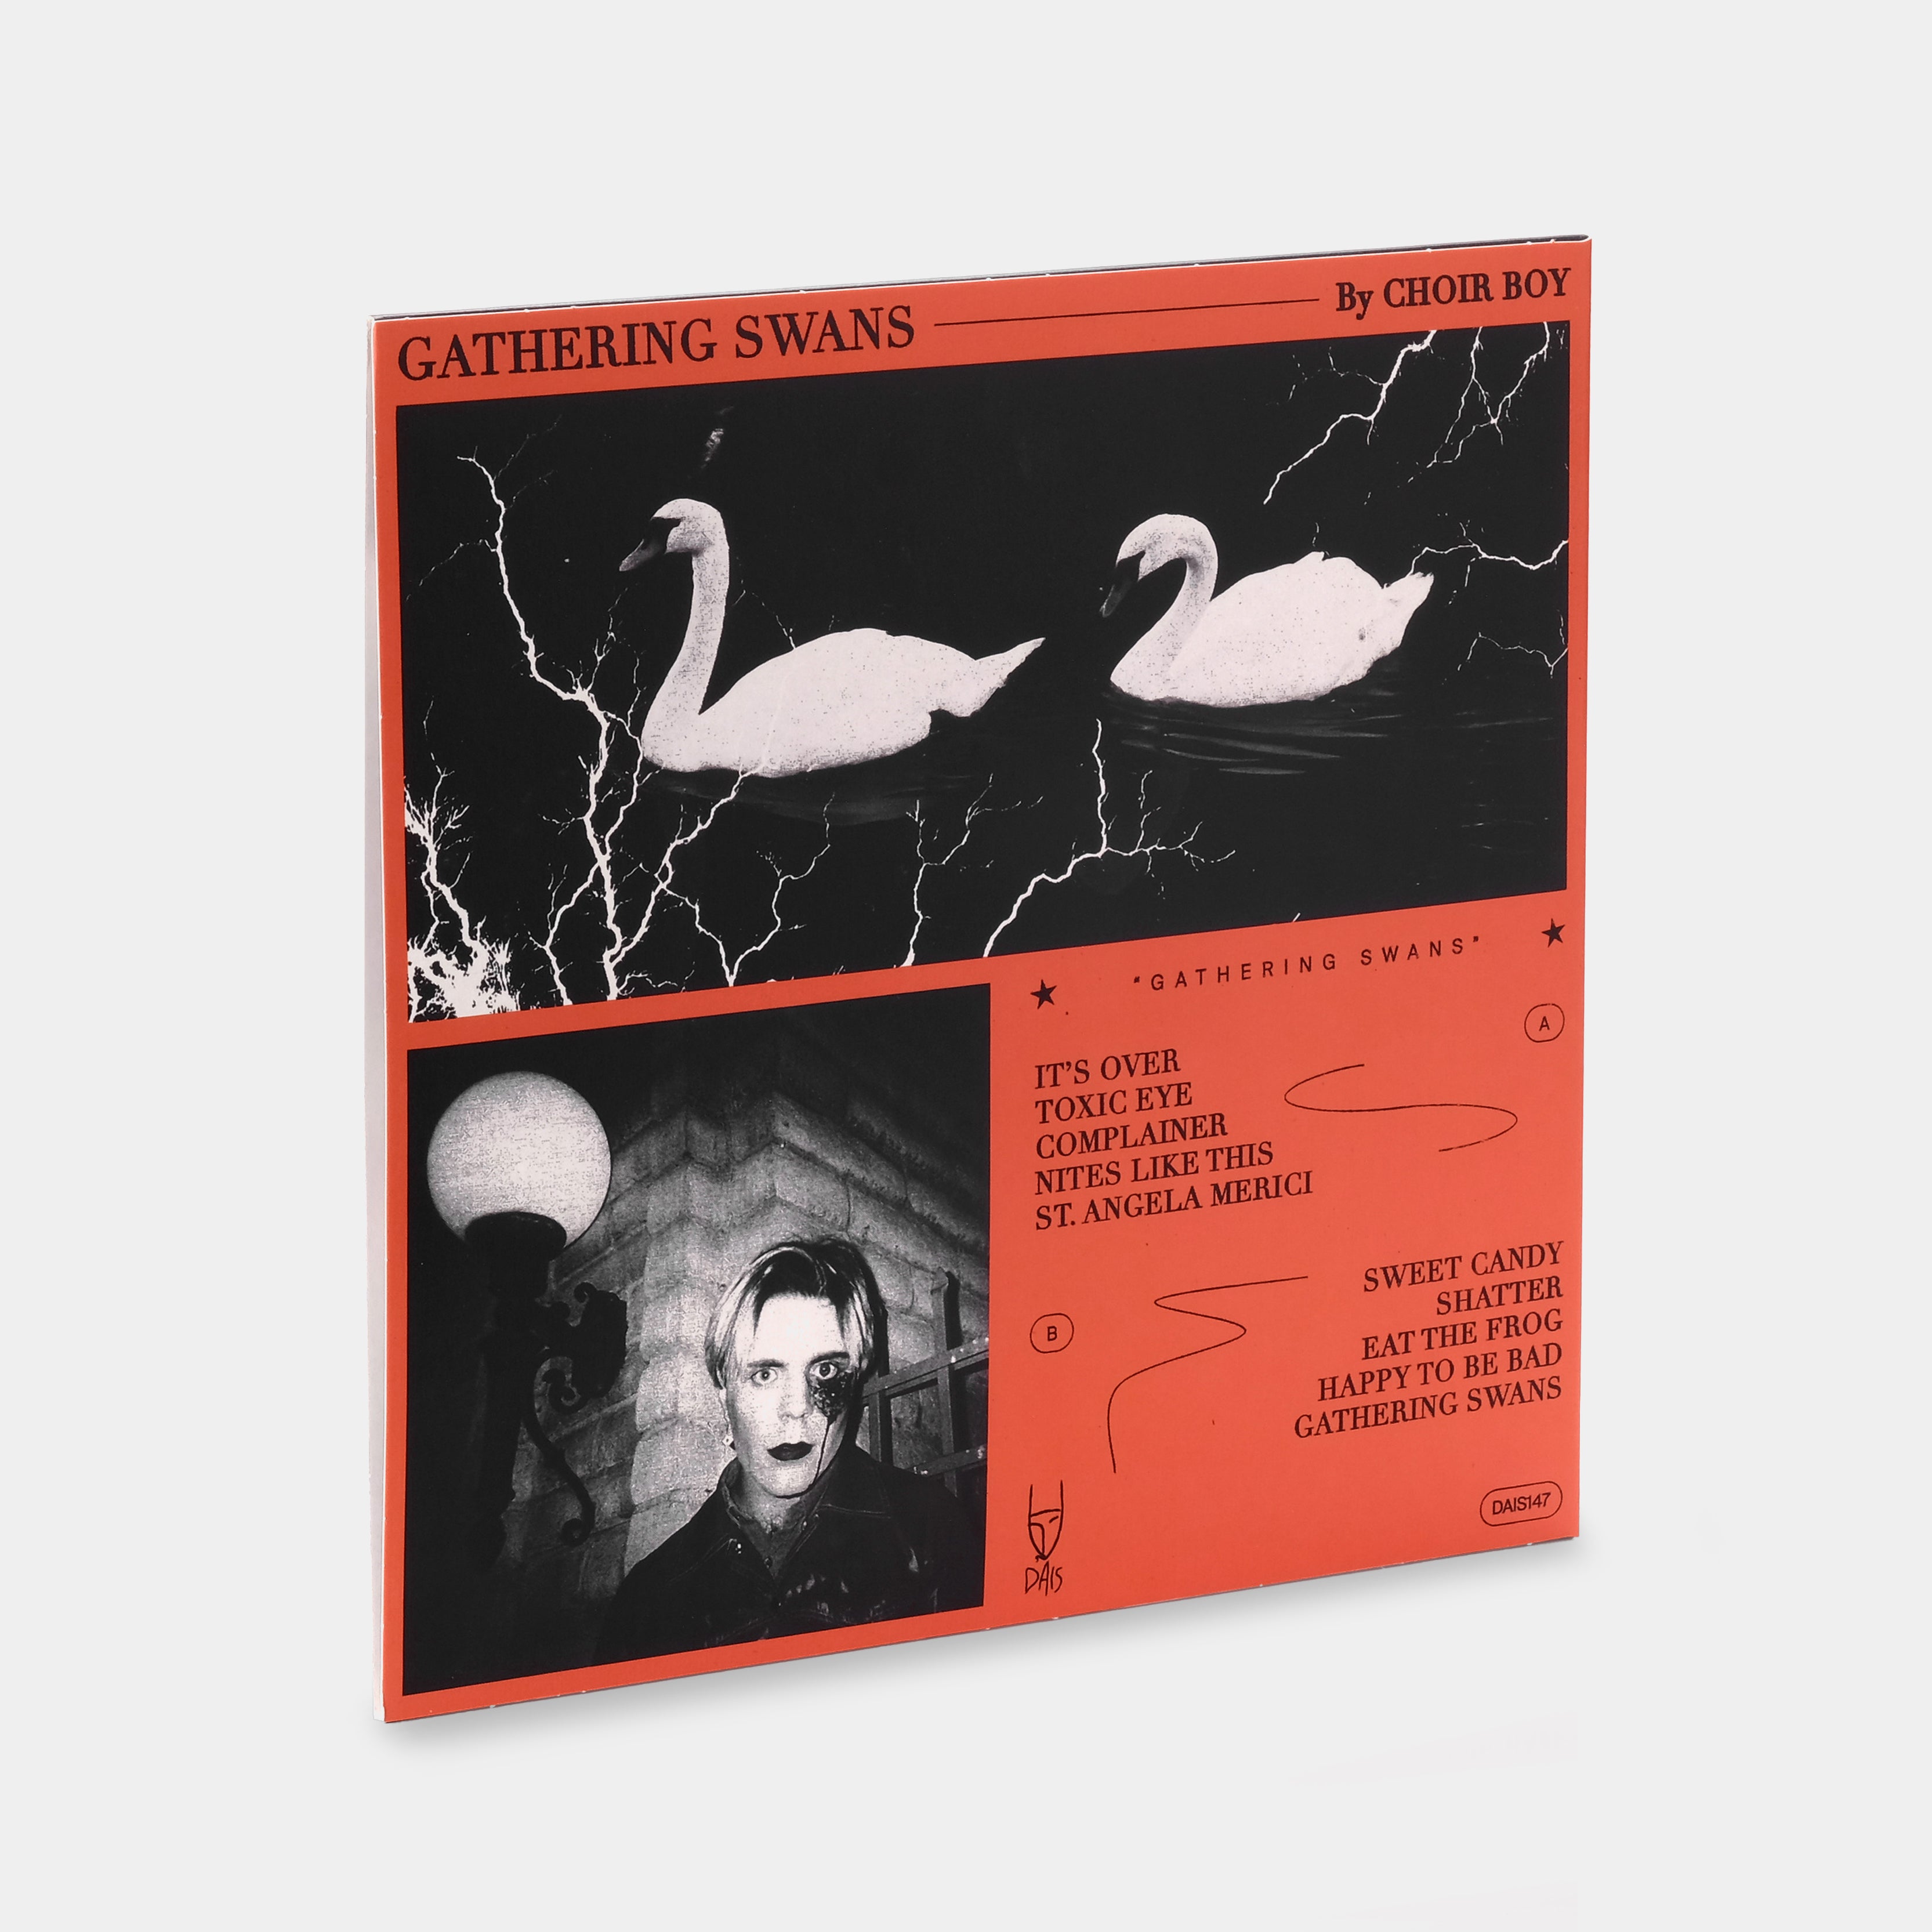 Choir Boy - Gathering Swans Limited Edition LP Transparent Clear Vinyl Record